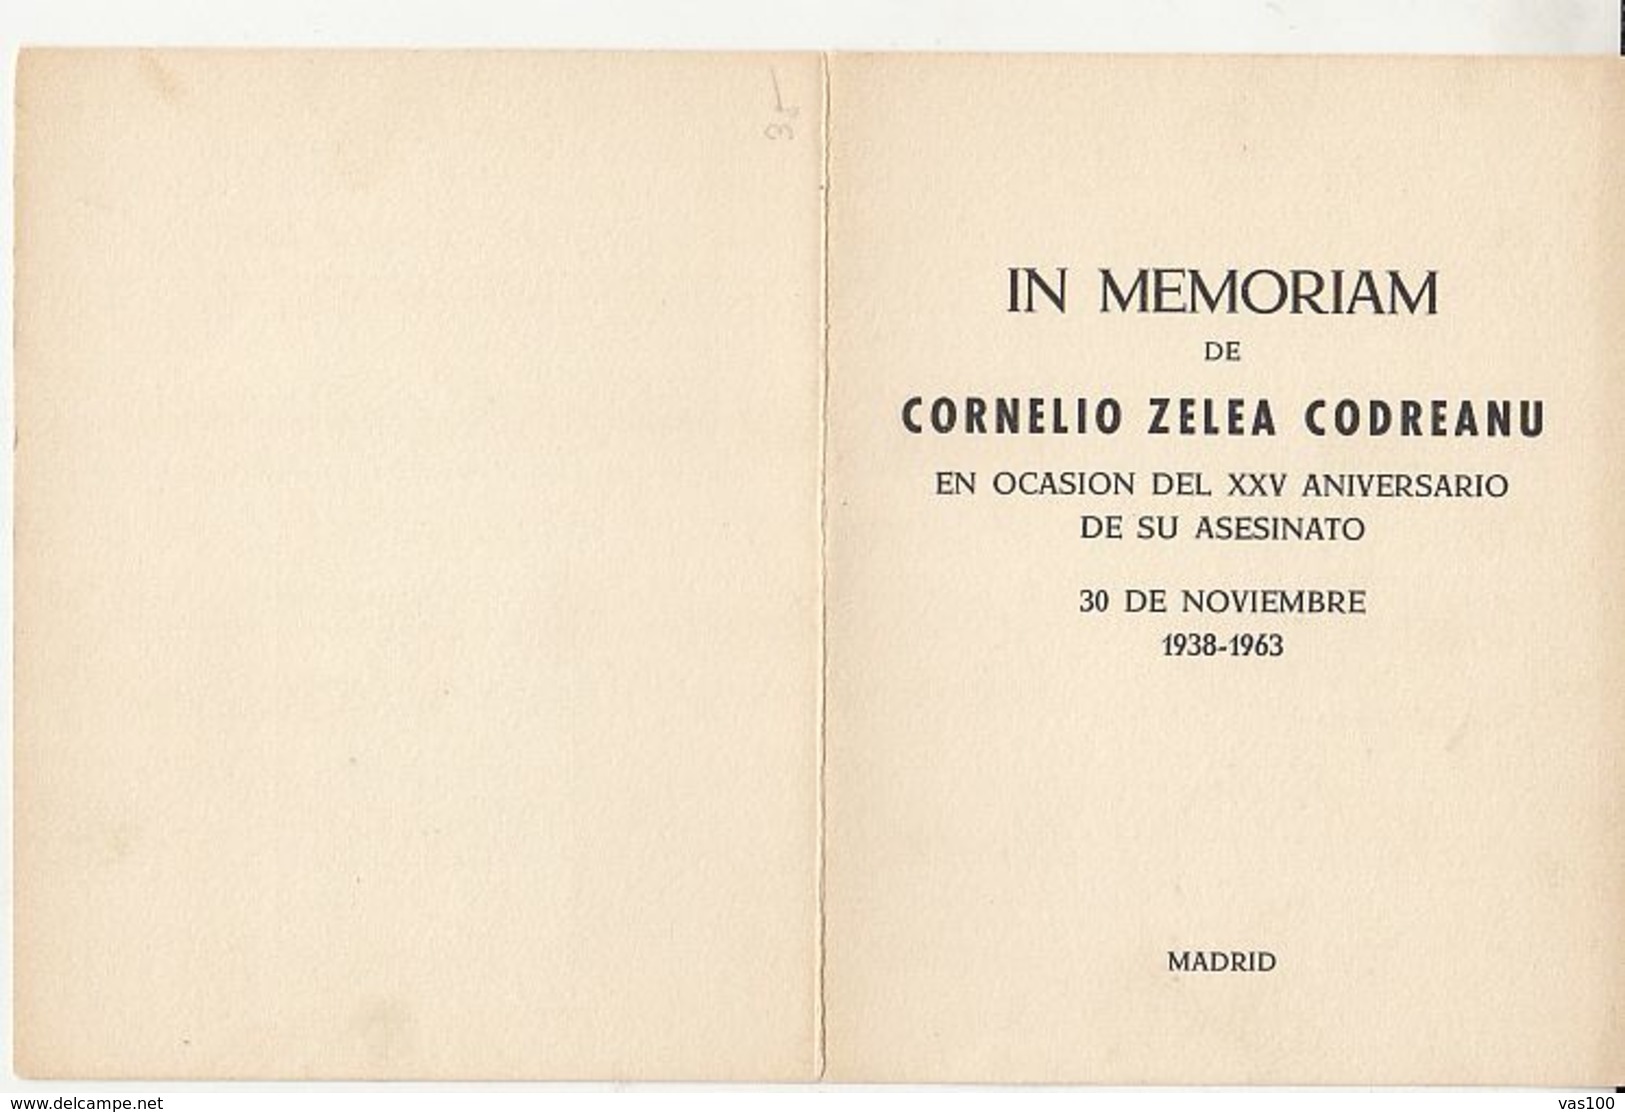 IN MEMORIAM CORNELIU ZELEA CODREANU, IRON GUARD LEADER, BOOKLET, ROMANIAN EXILE IN SPAIN, 1963, ROMANIA - Carnets